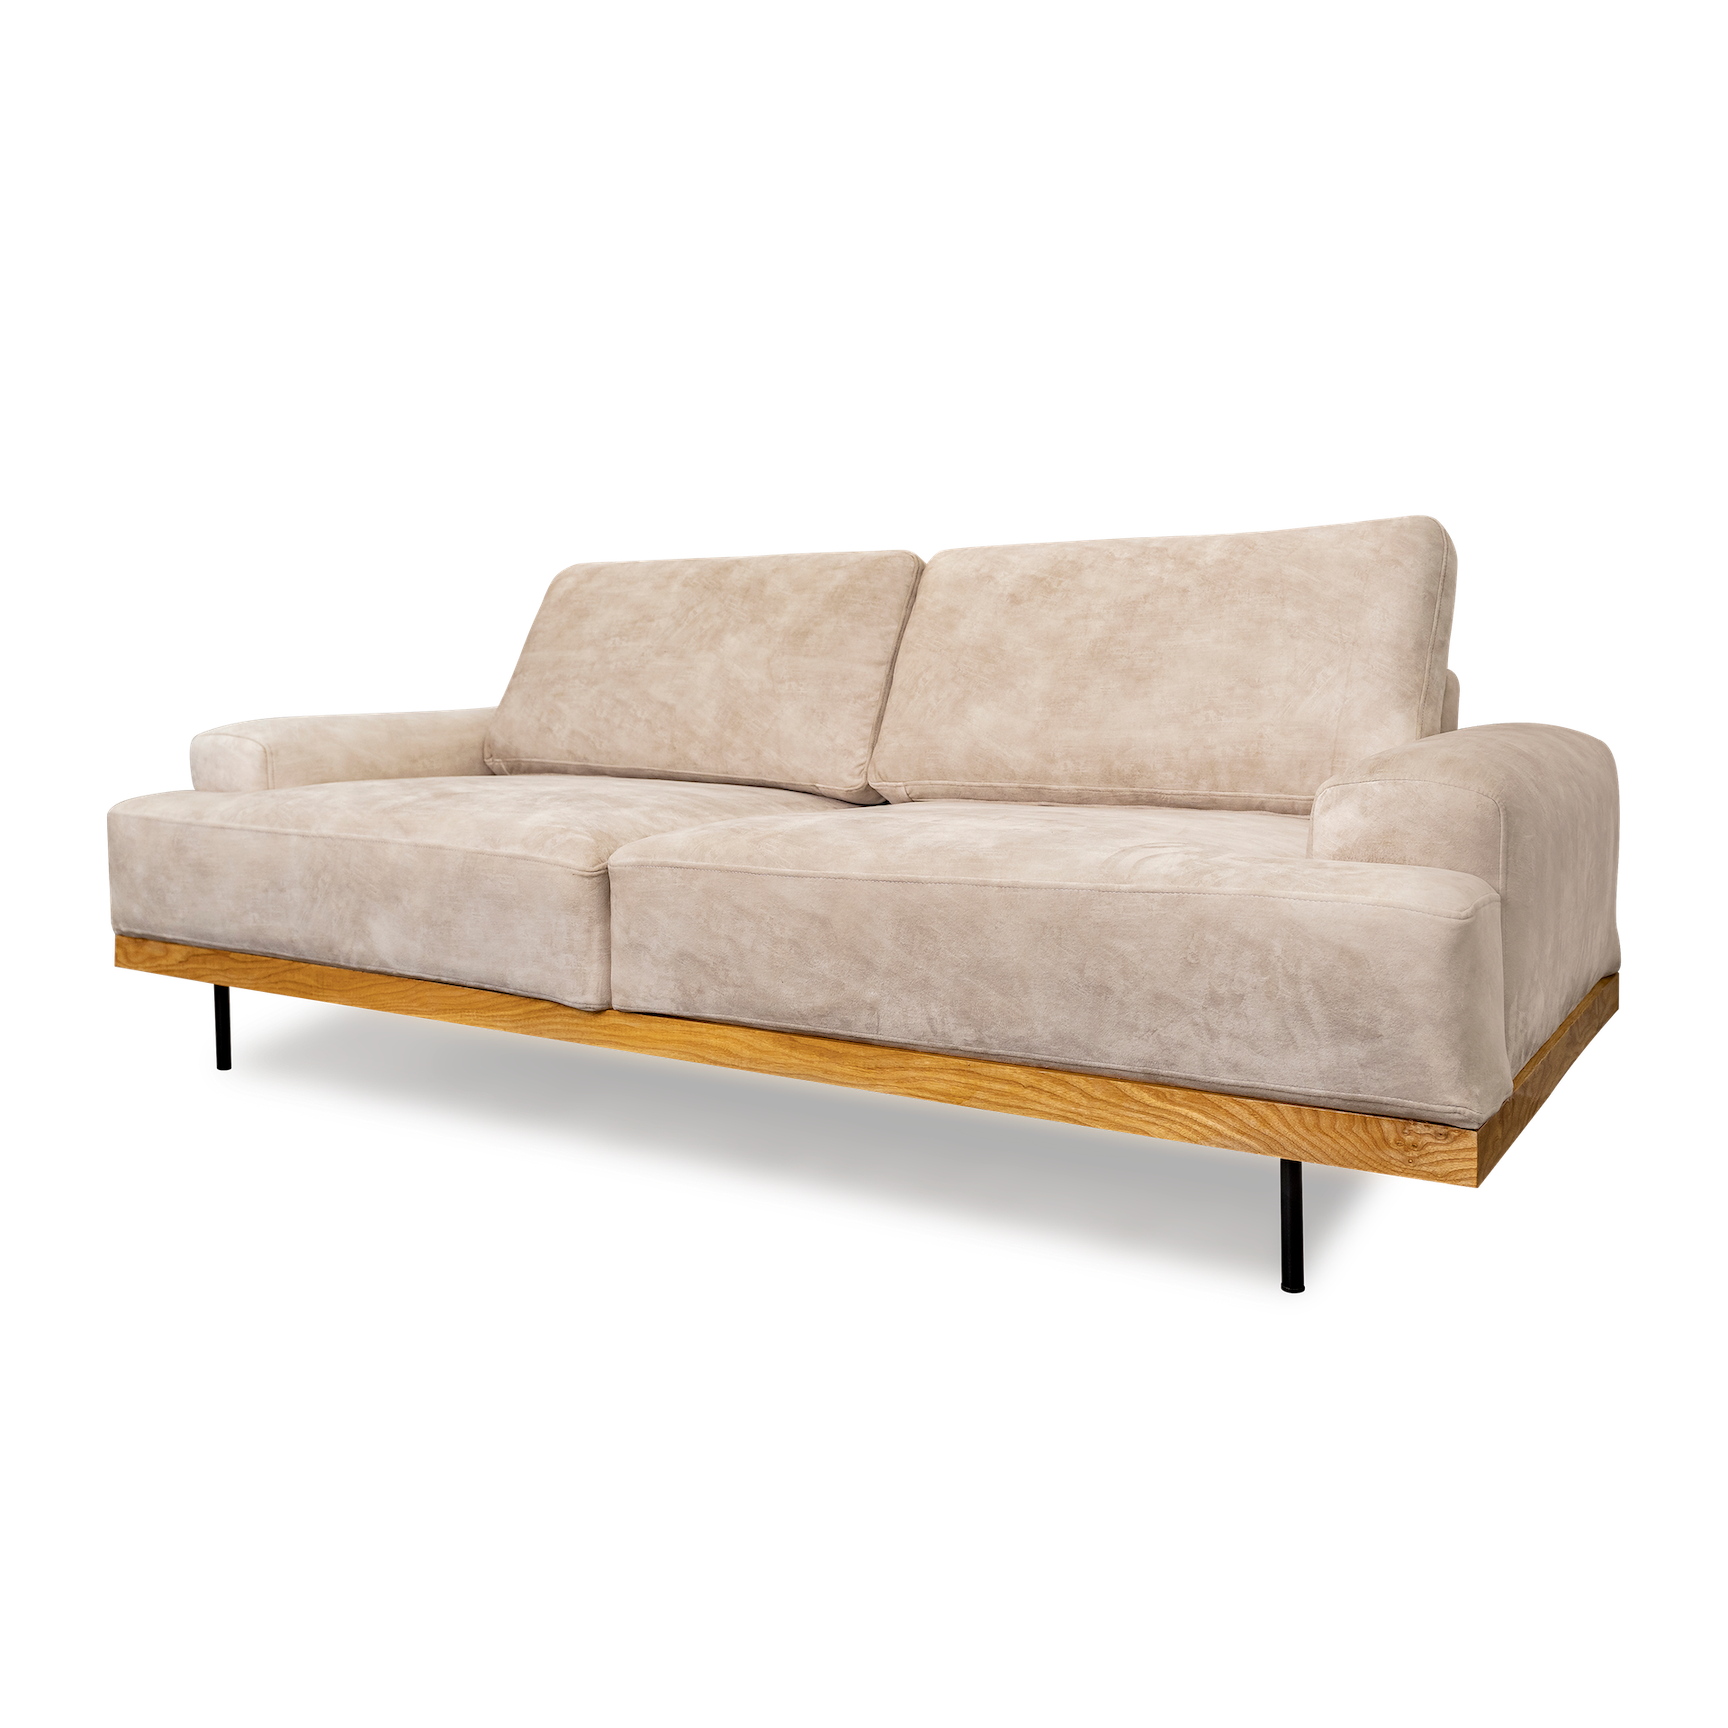  Sofa Flying Carpet, 3 Chỗ Ngồi 